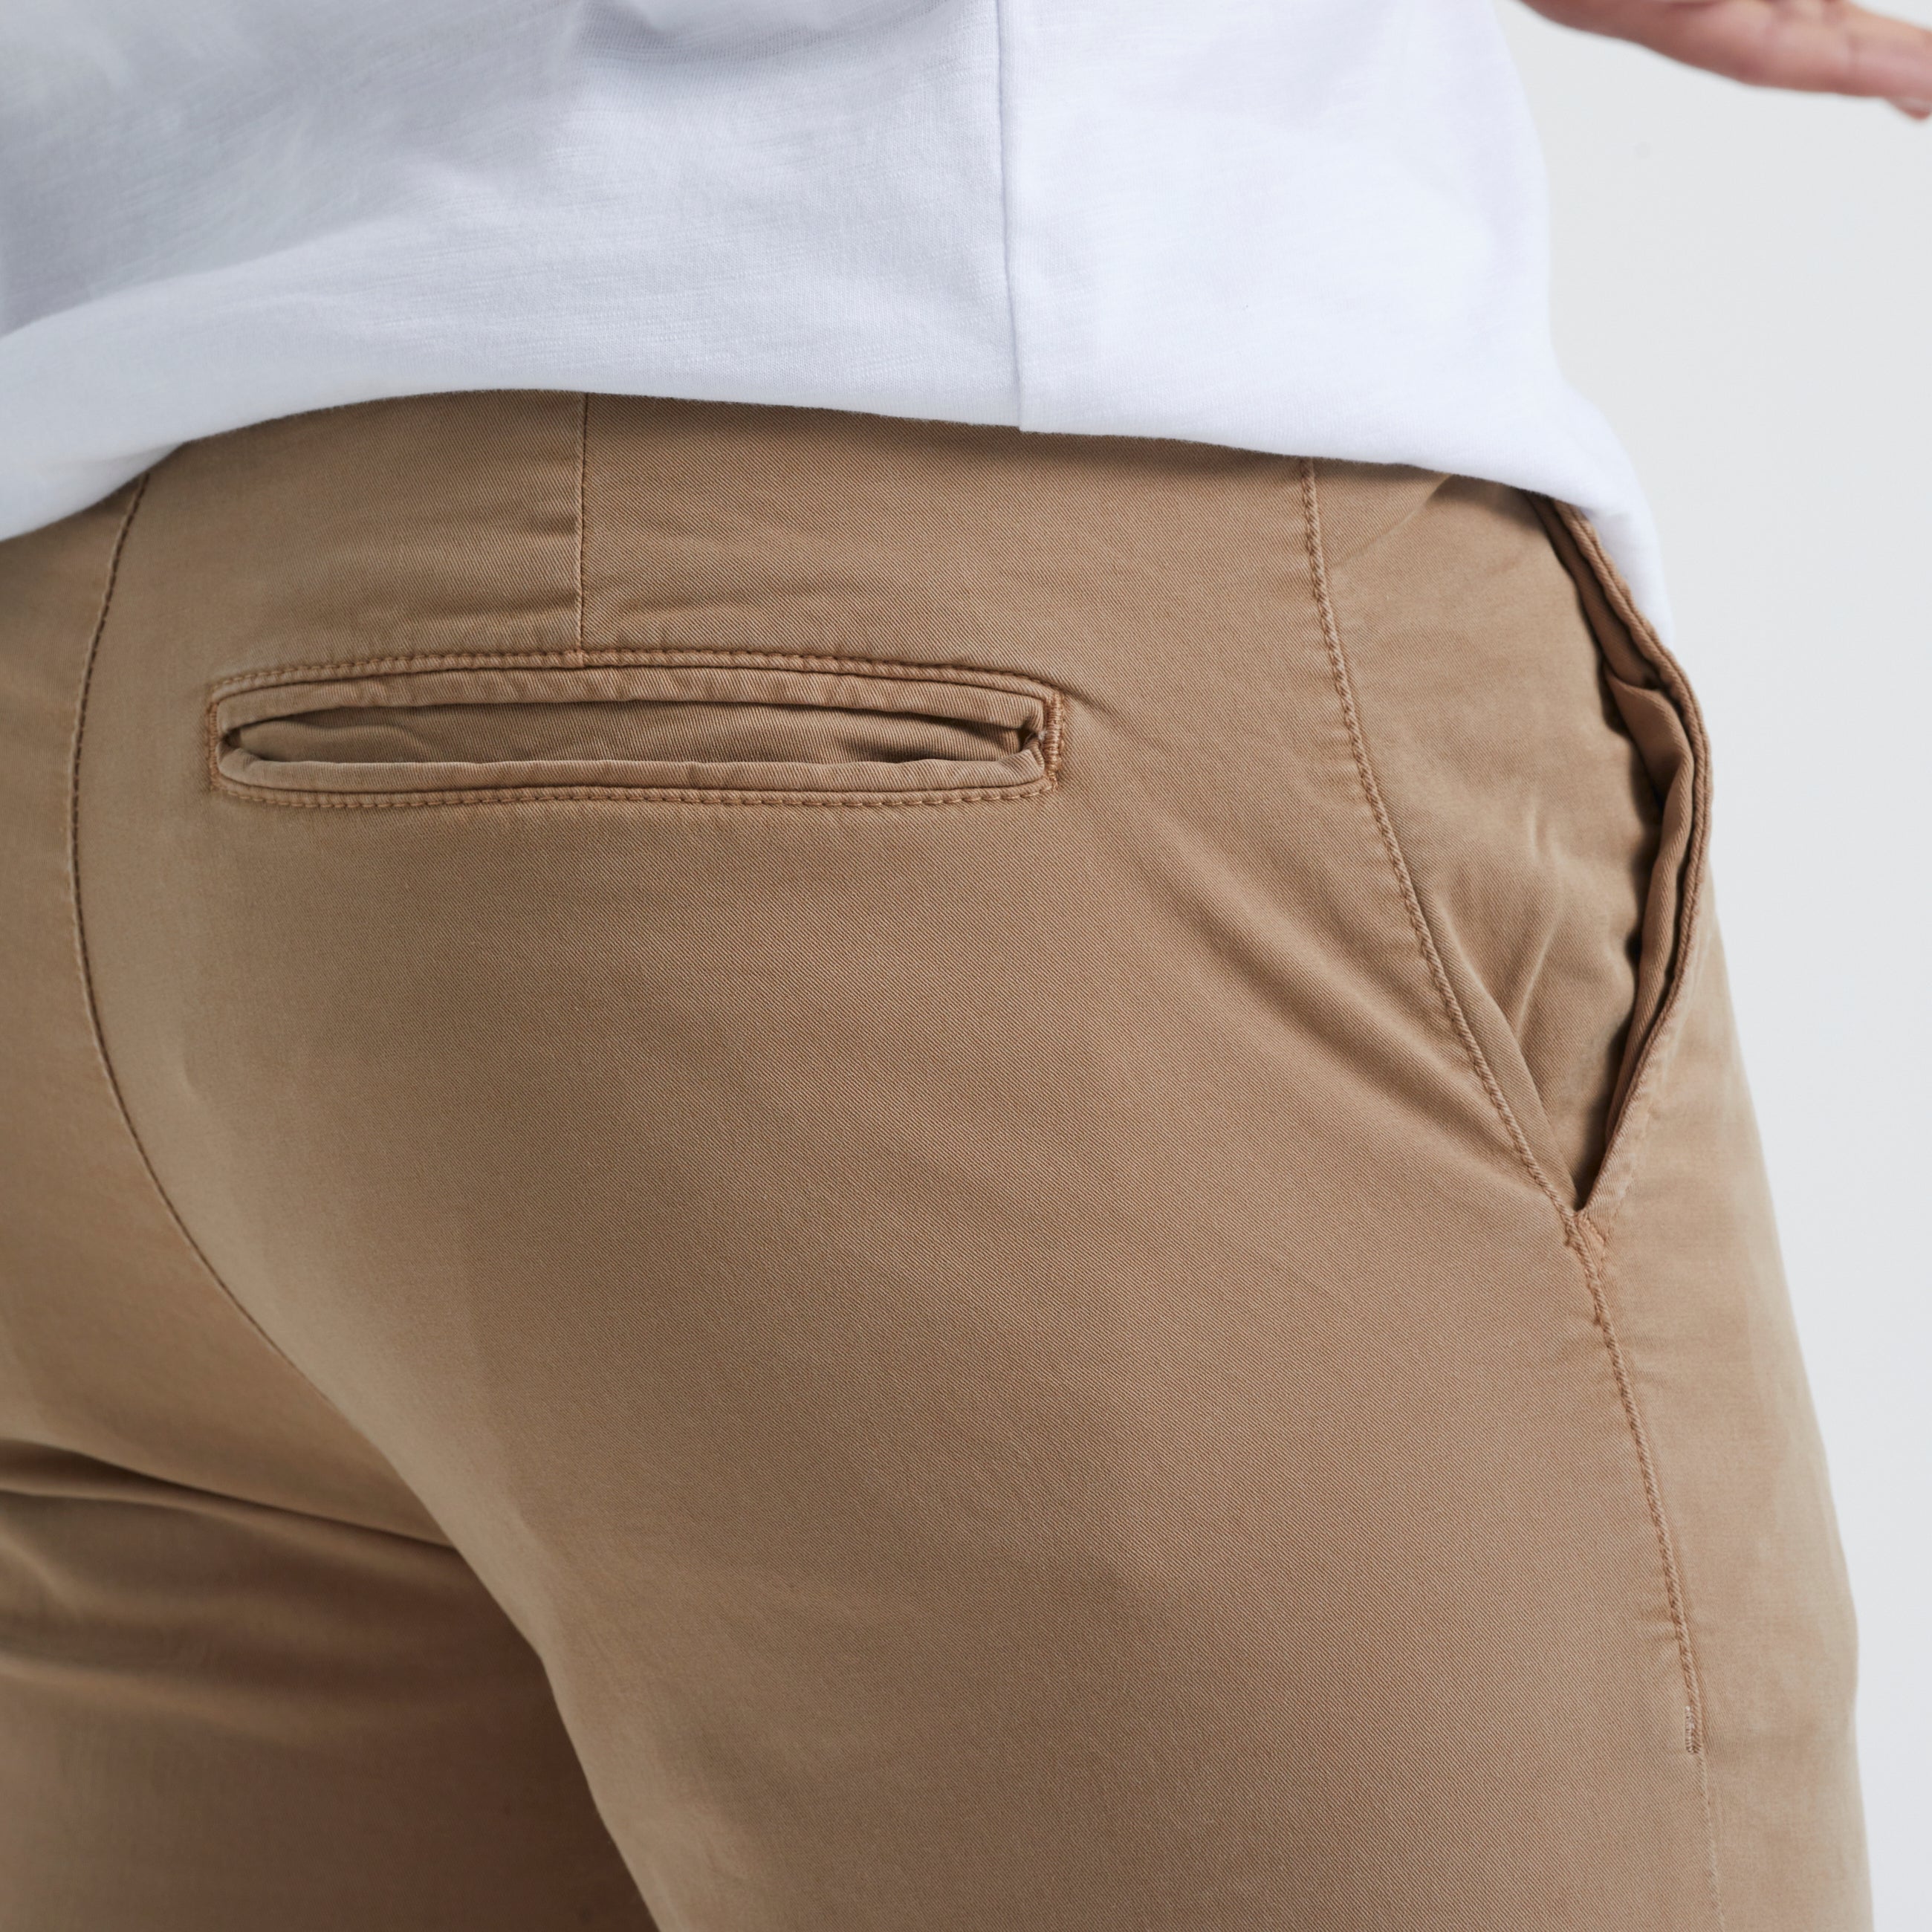 By Garment Makers The Organic Chino Pants GOTS Pants 2851 Khaki